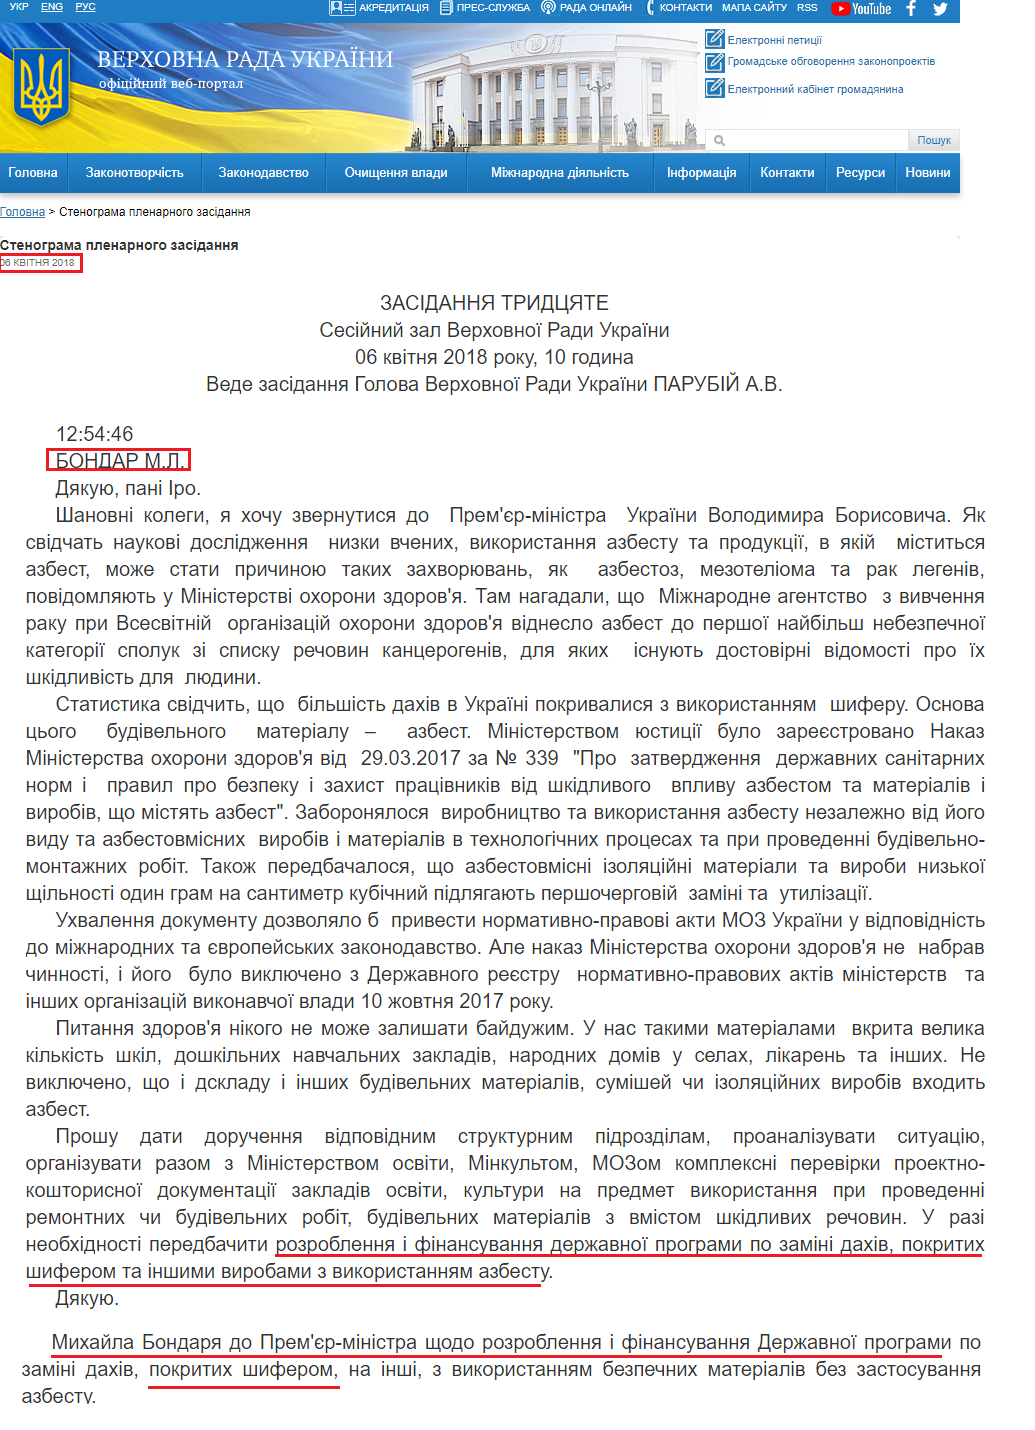 http://iportal.rada.gov.ua/meeting/stenogr/show/6777.html